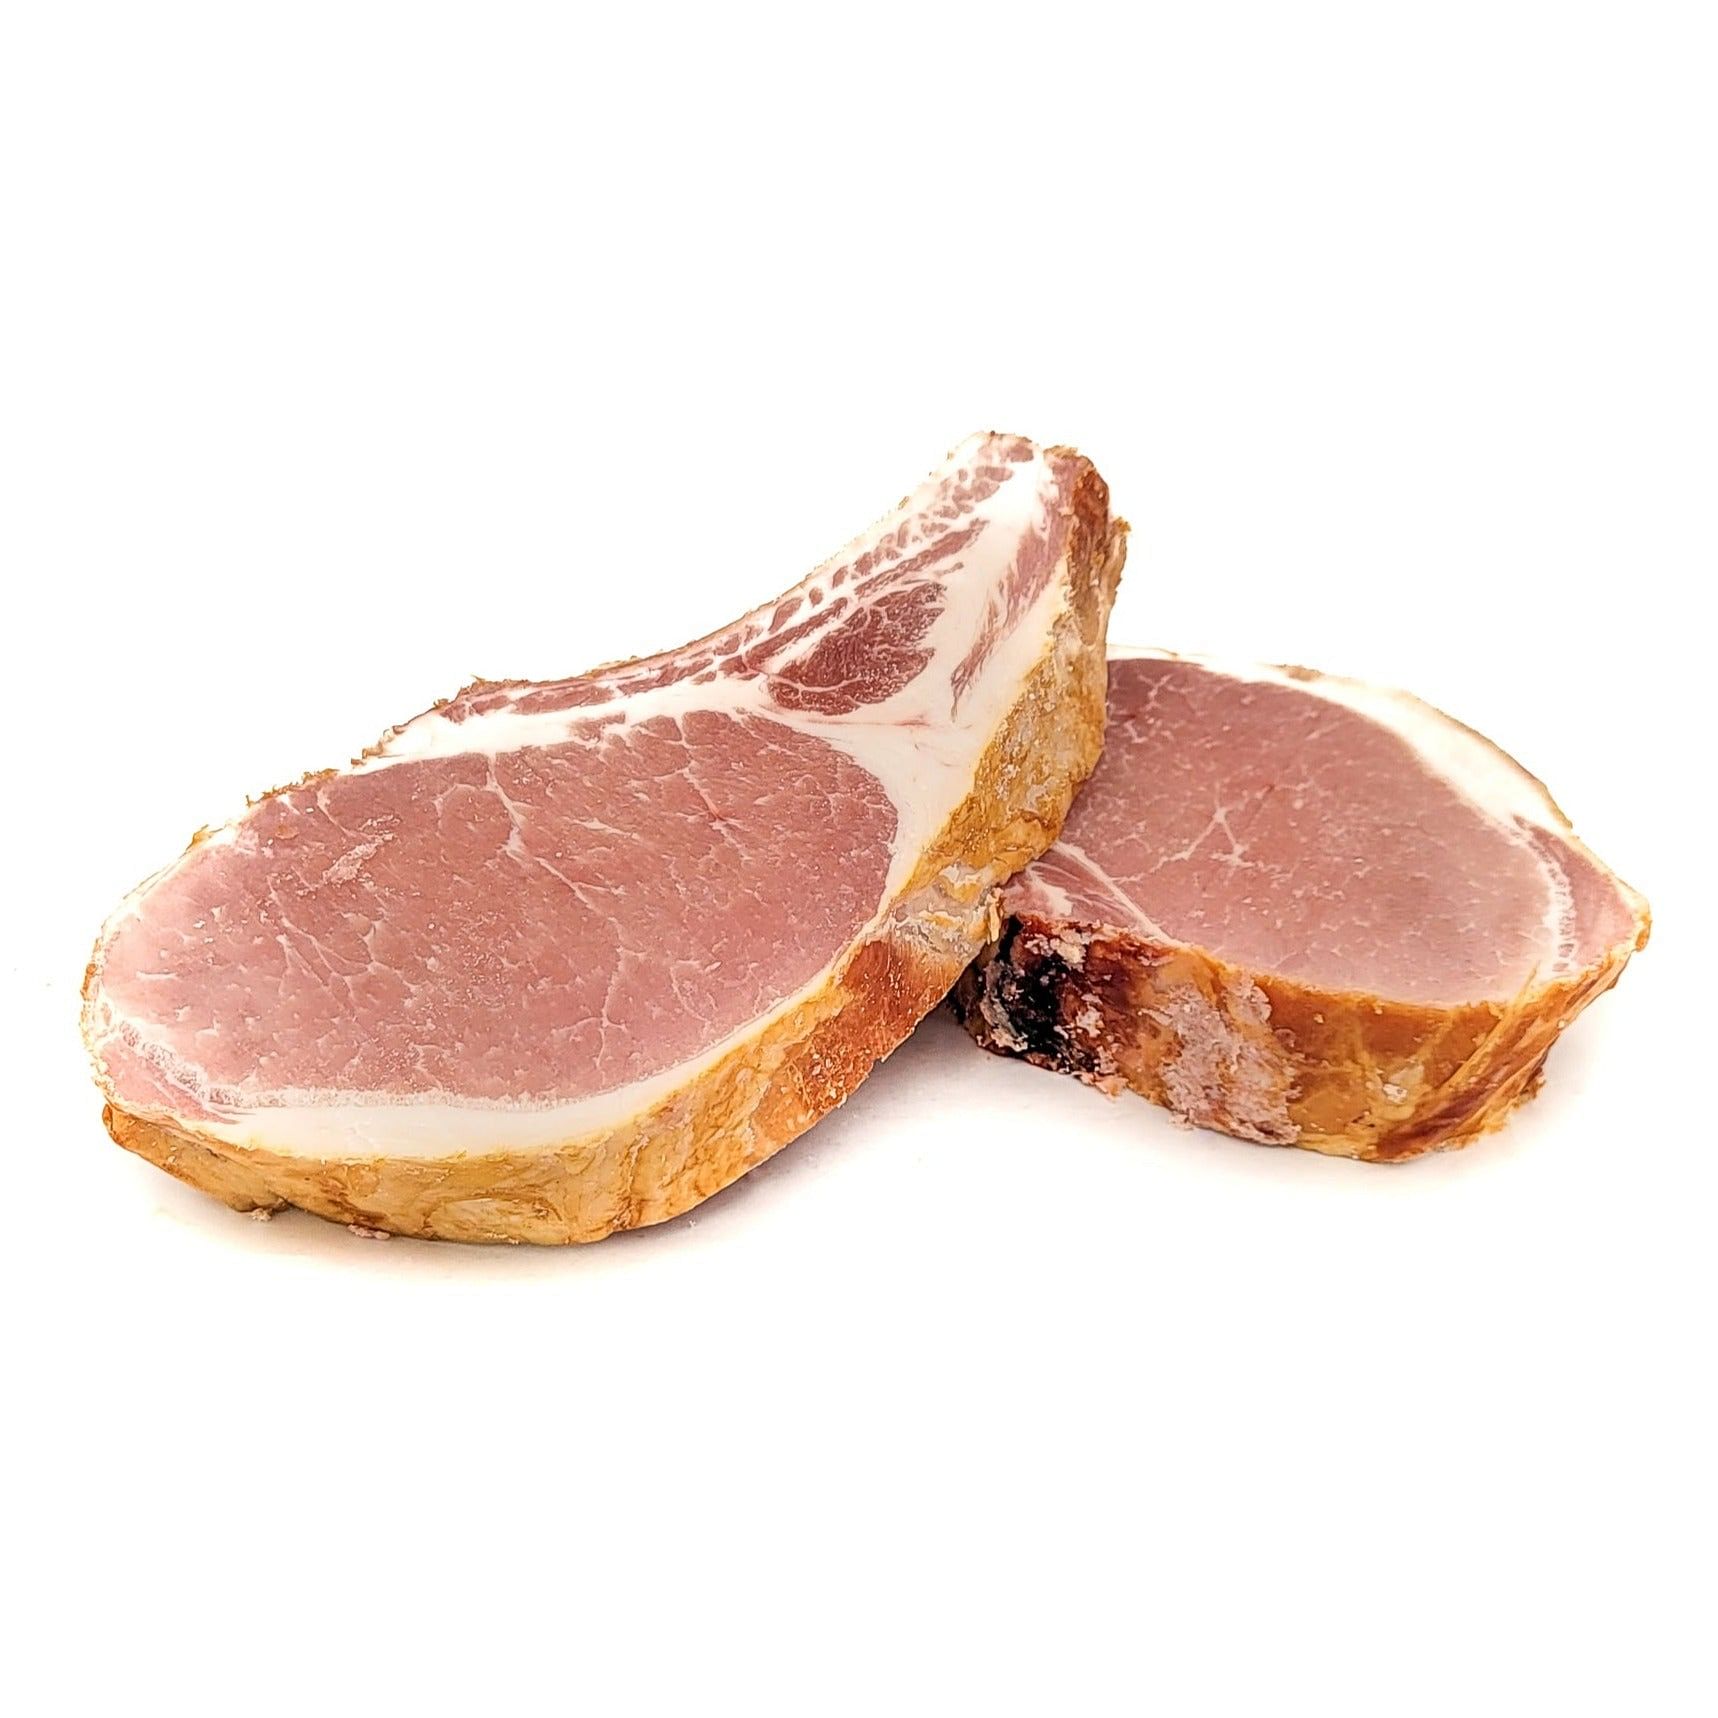 Smoked Pork Chops (2) - Valbella Gourmet Foods